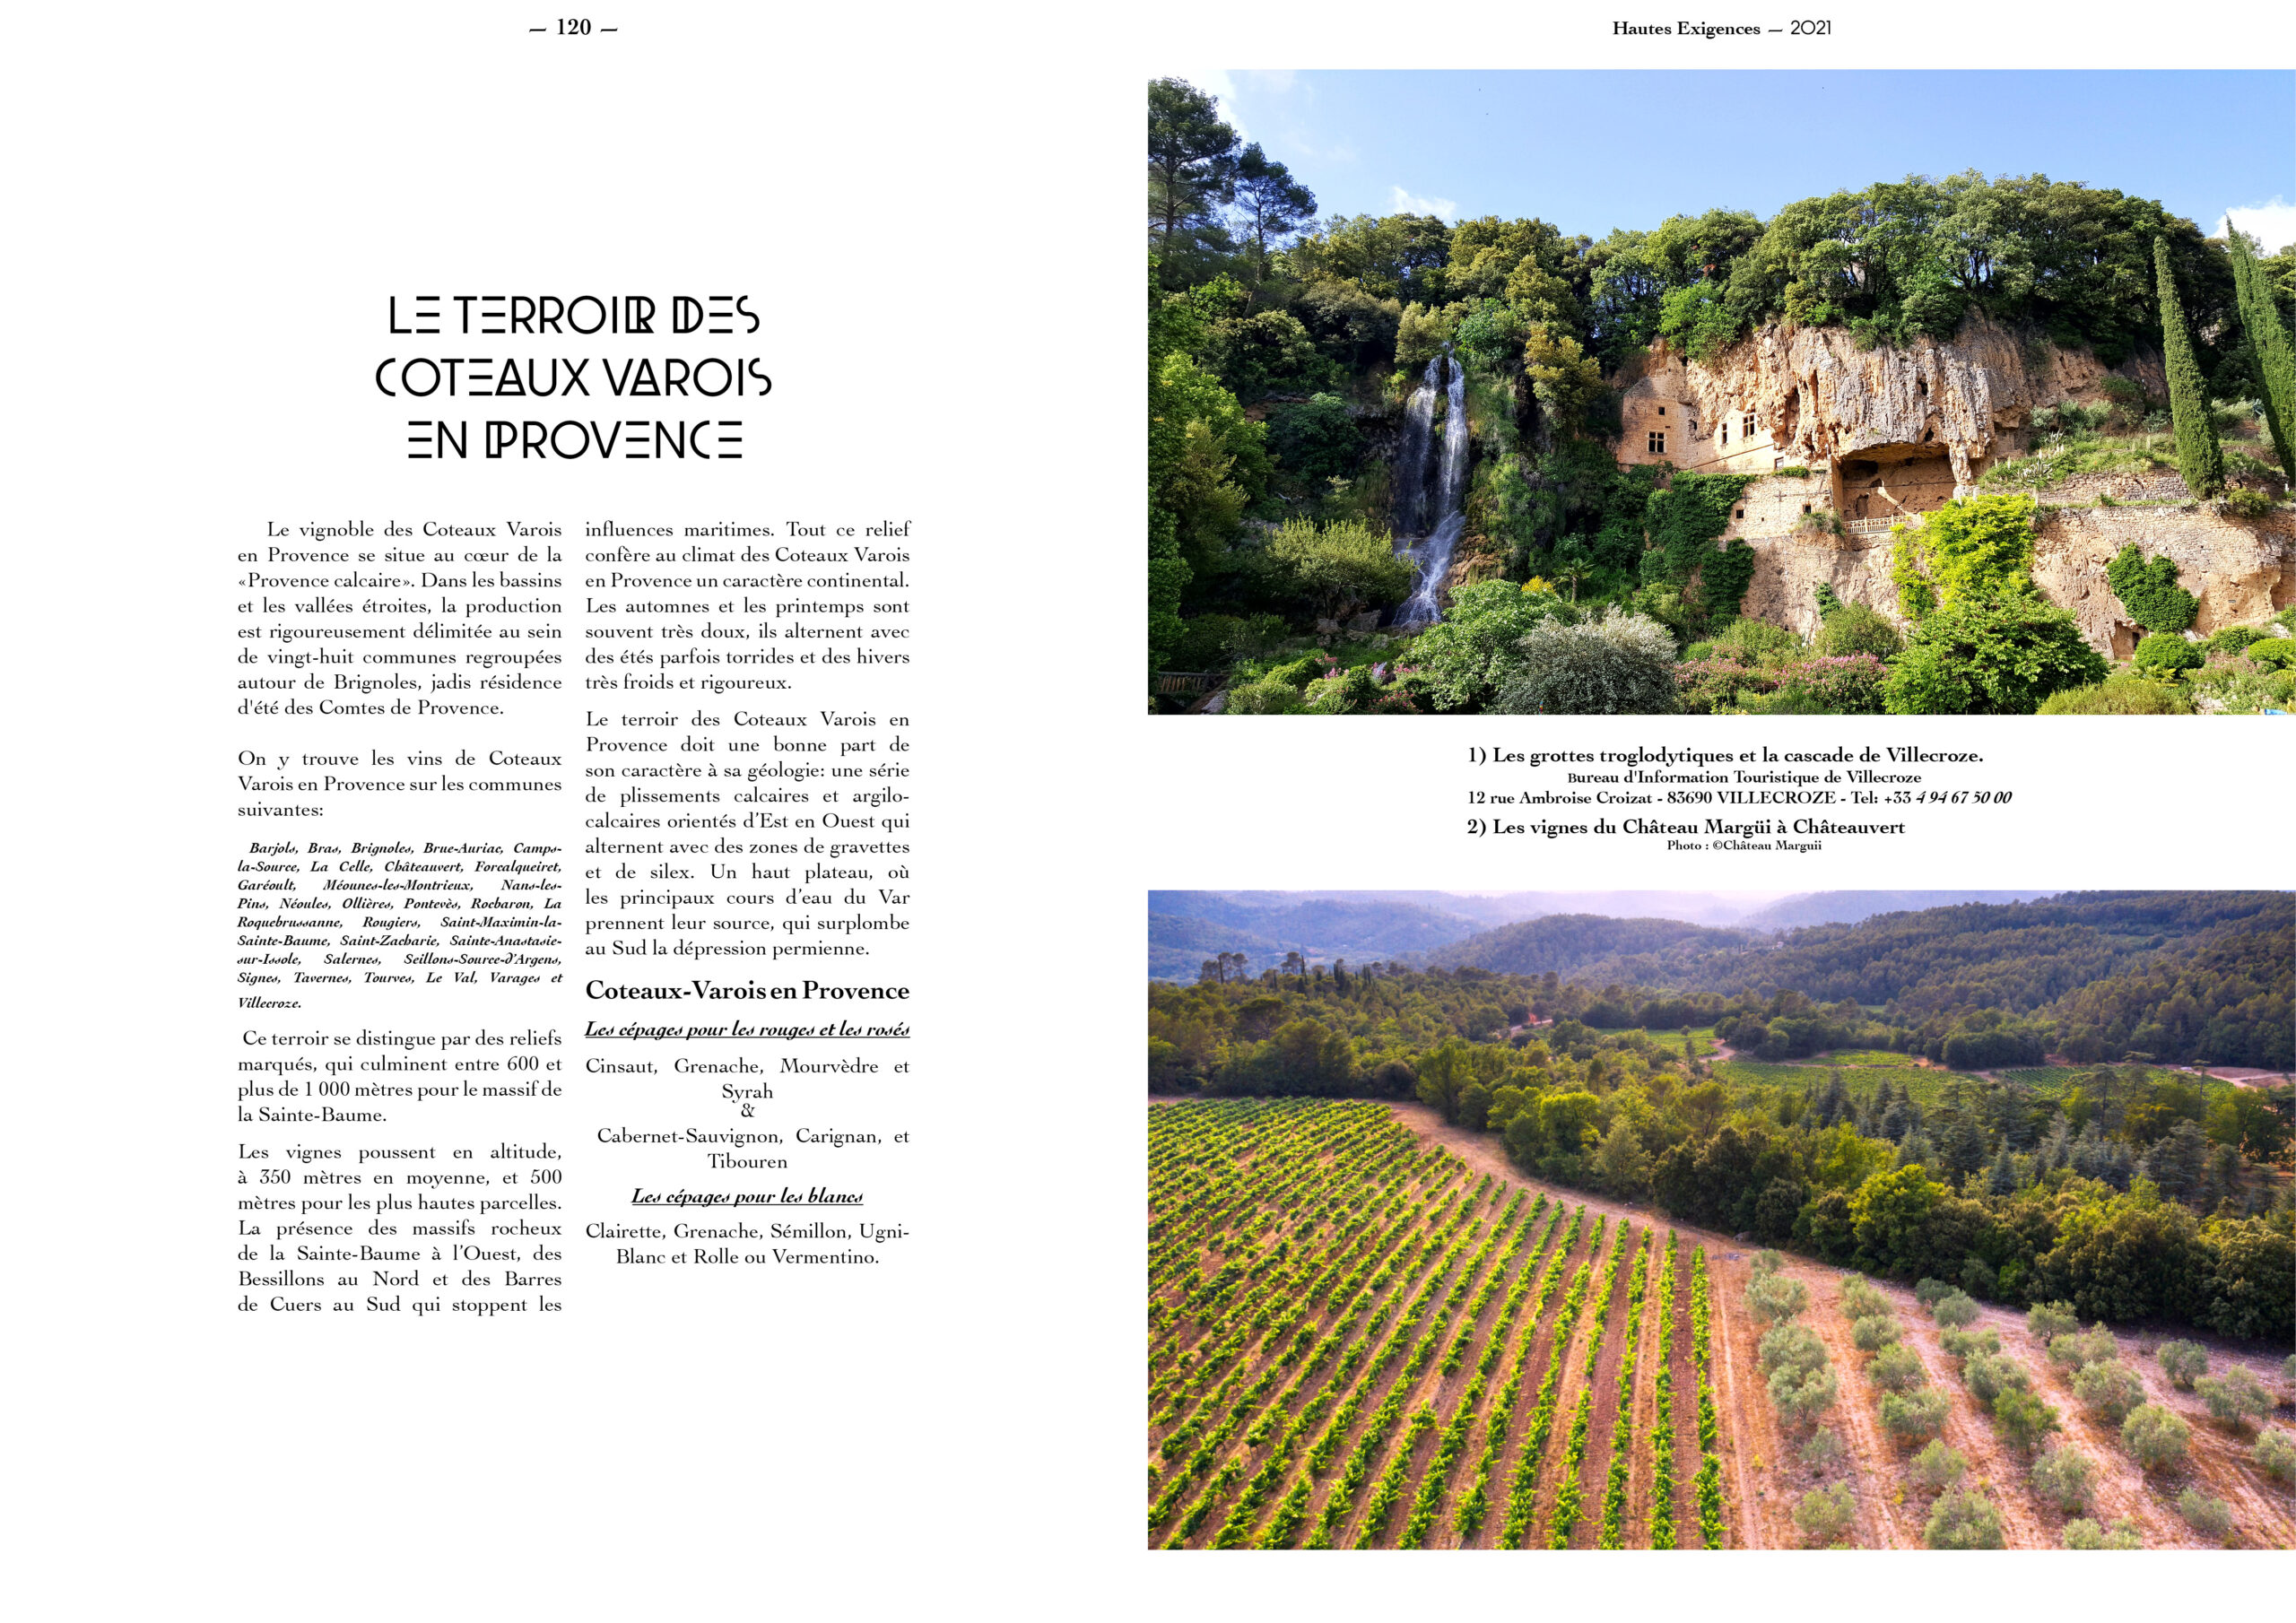 Hautes Exigences Magazine Hors Serie 2021 page 118-119